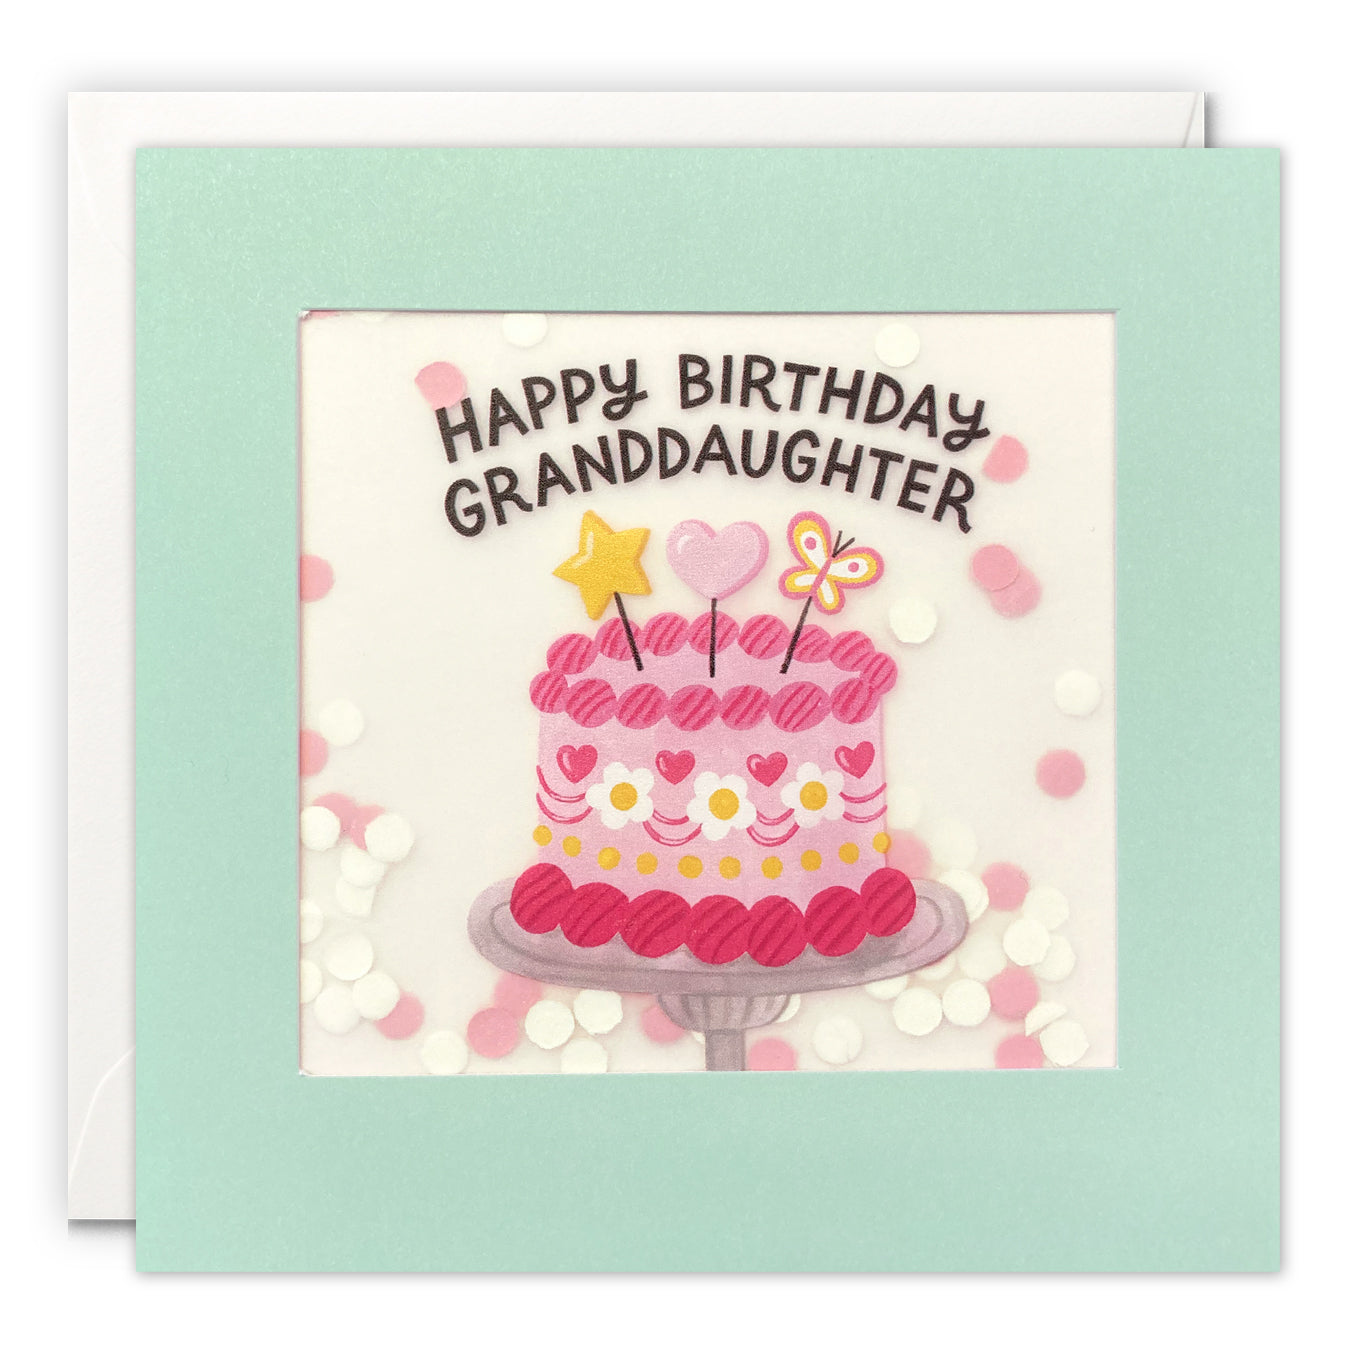 birthdaycake #truffle #specialcake #grandmother #granddaughter #flowers  #cute #designercakes #custemisedcakes #instagramcakes… | Instagram